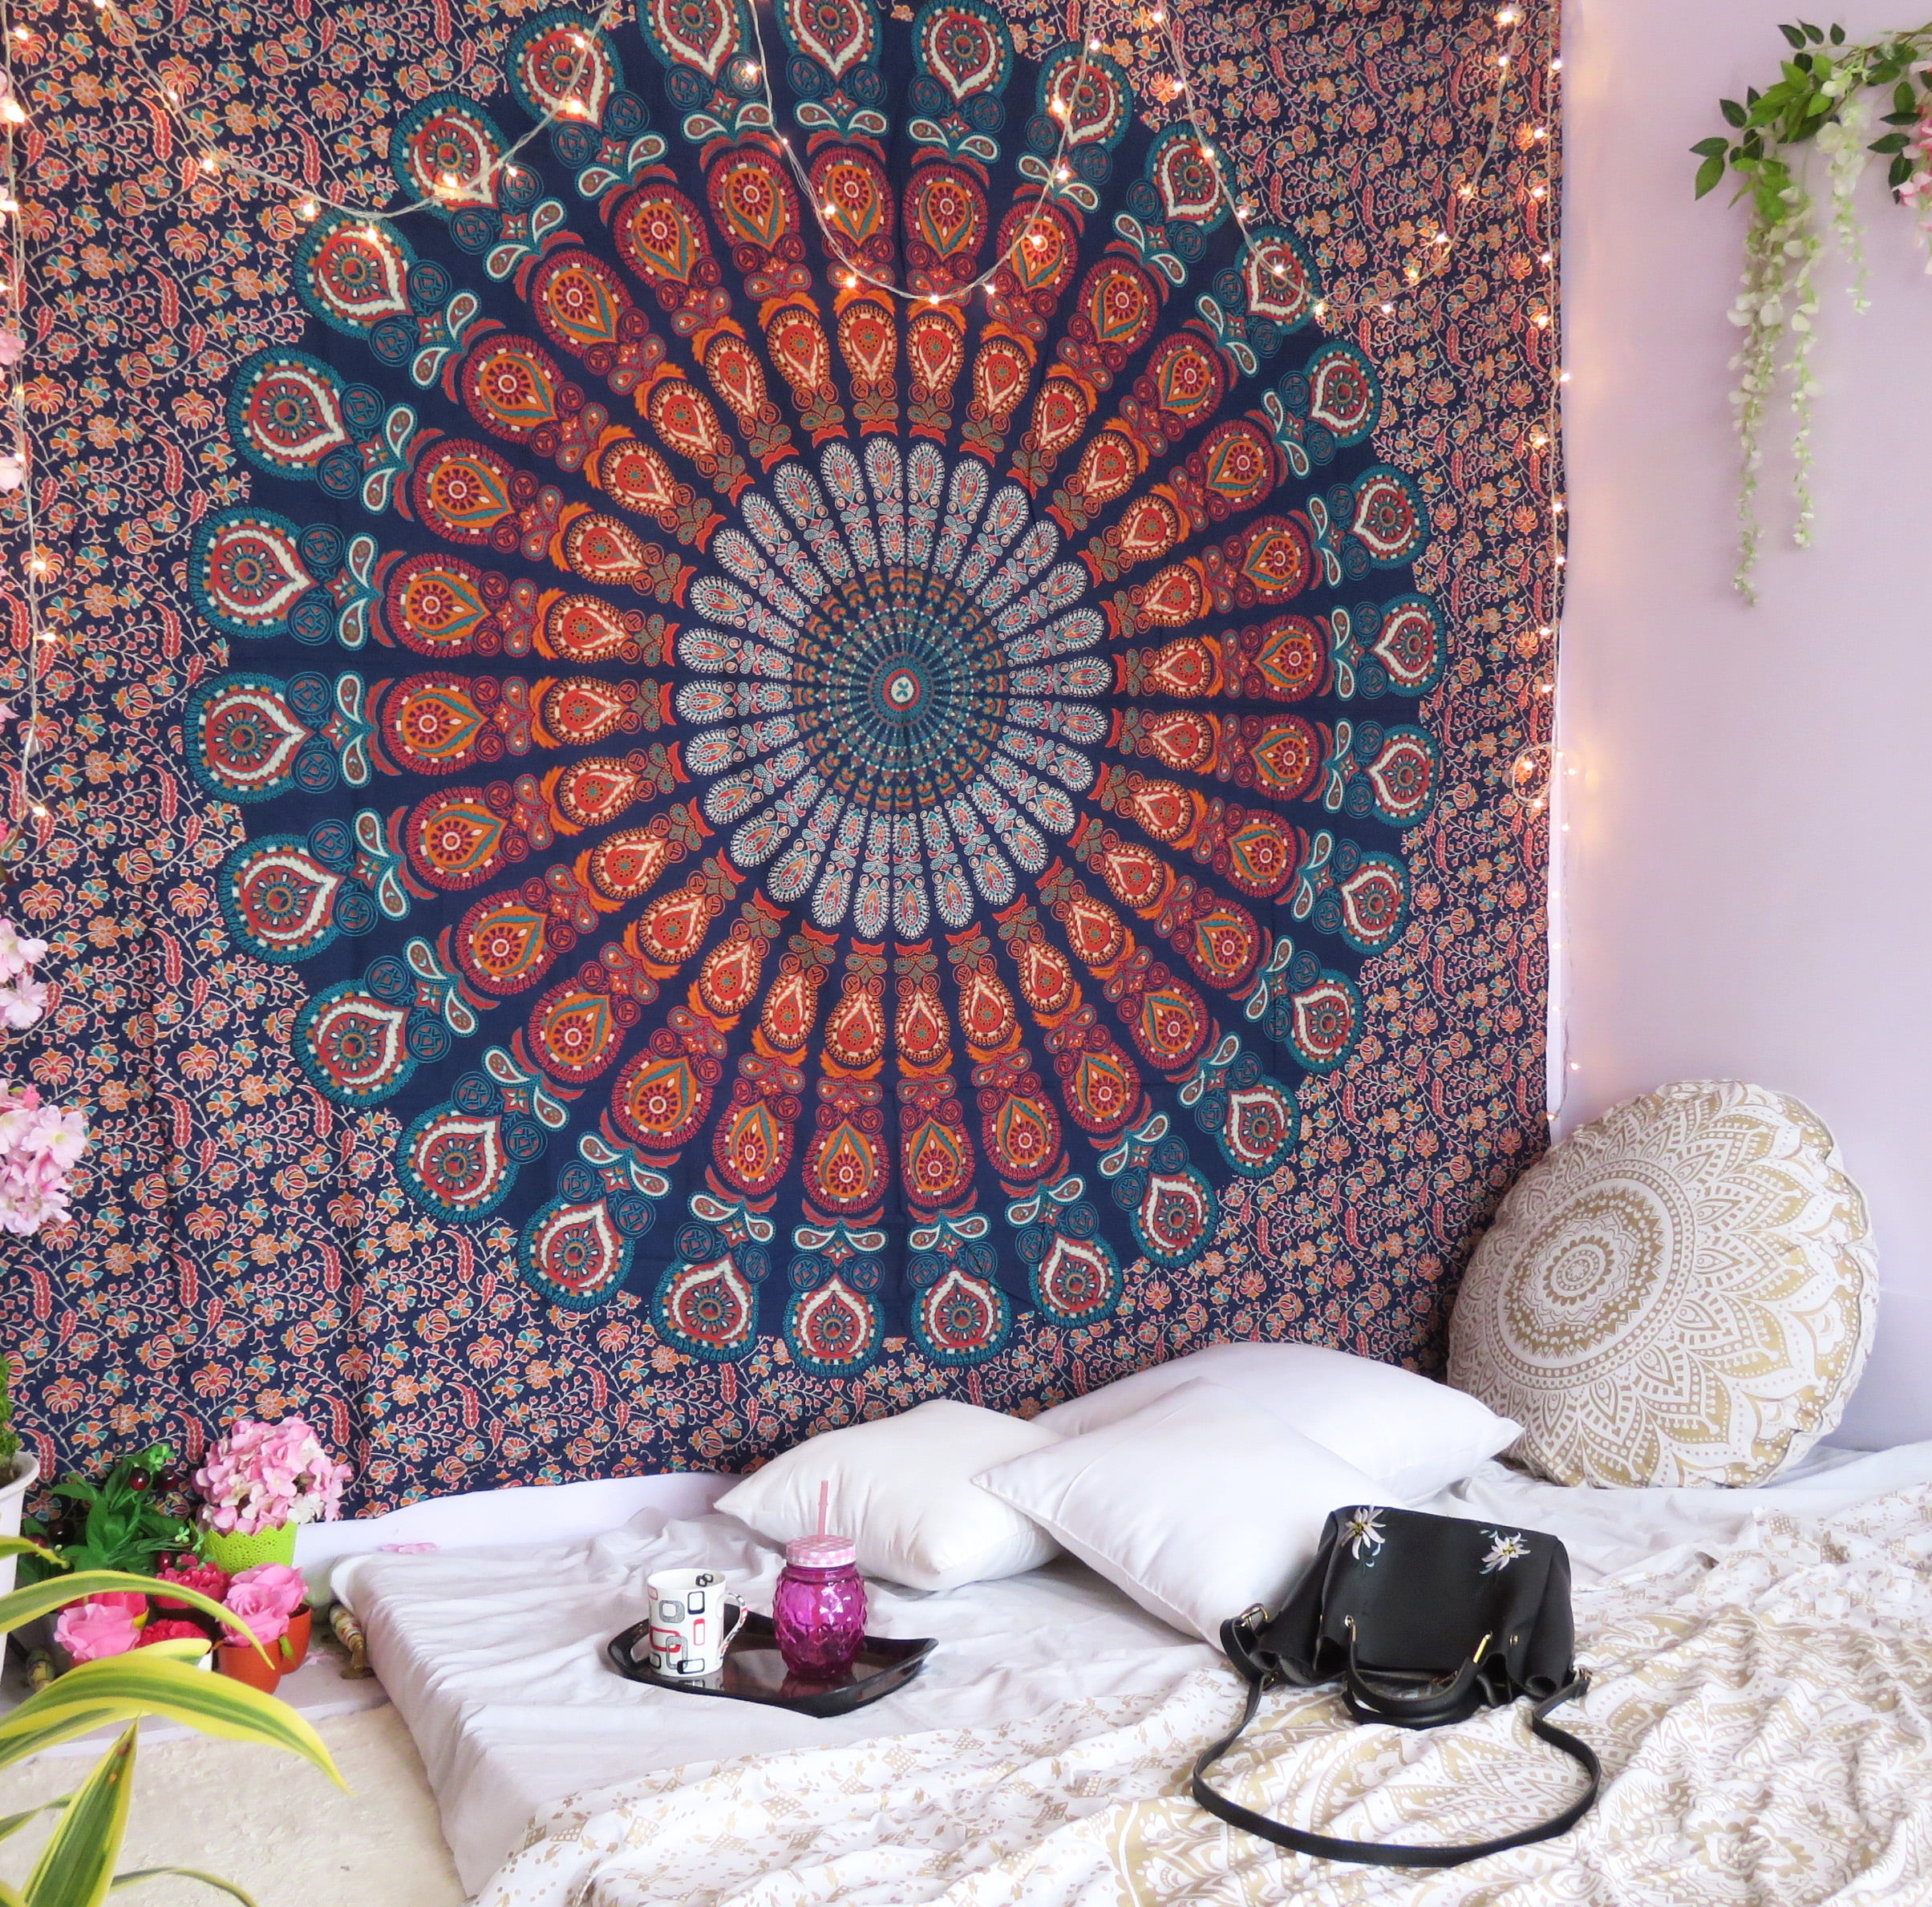 Twin Mandala Indian Hippie Beach Blanket Wall Hanging Mandala Tapestry Throw